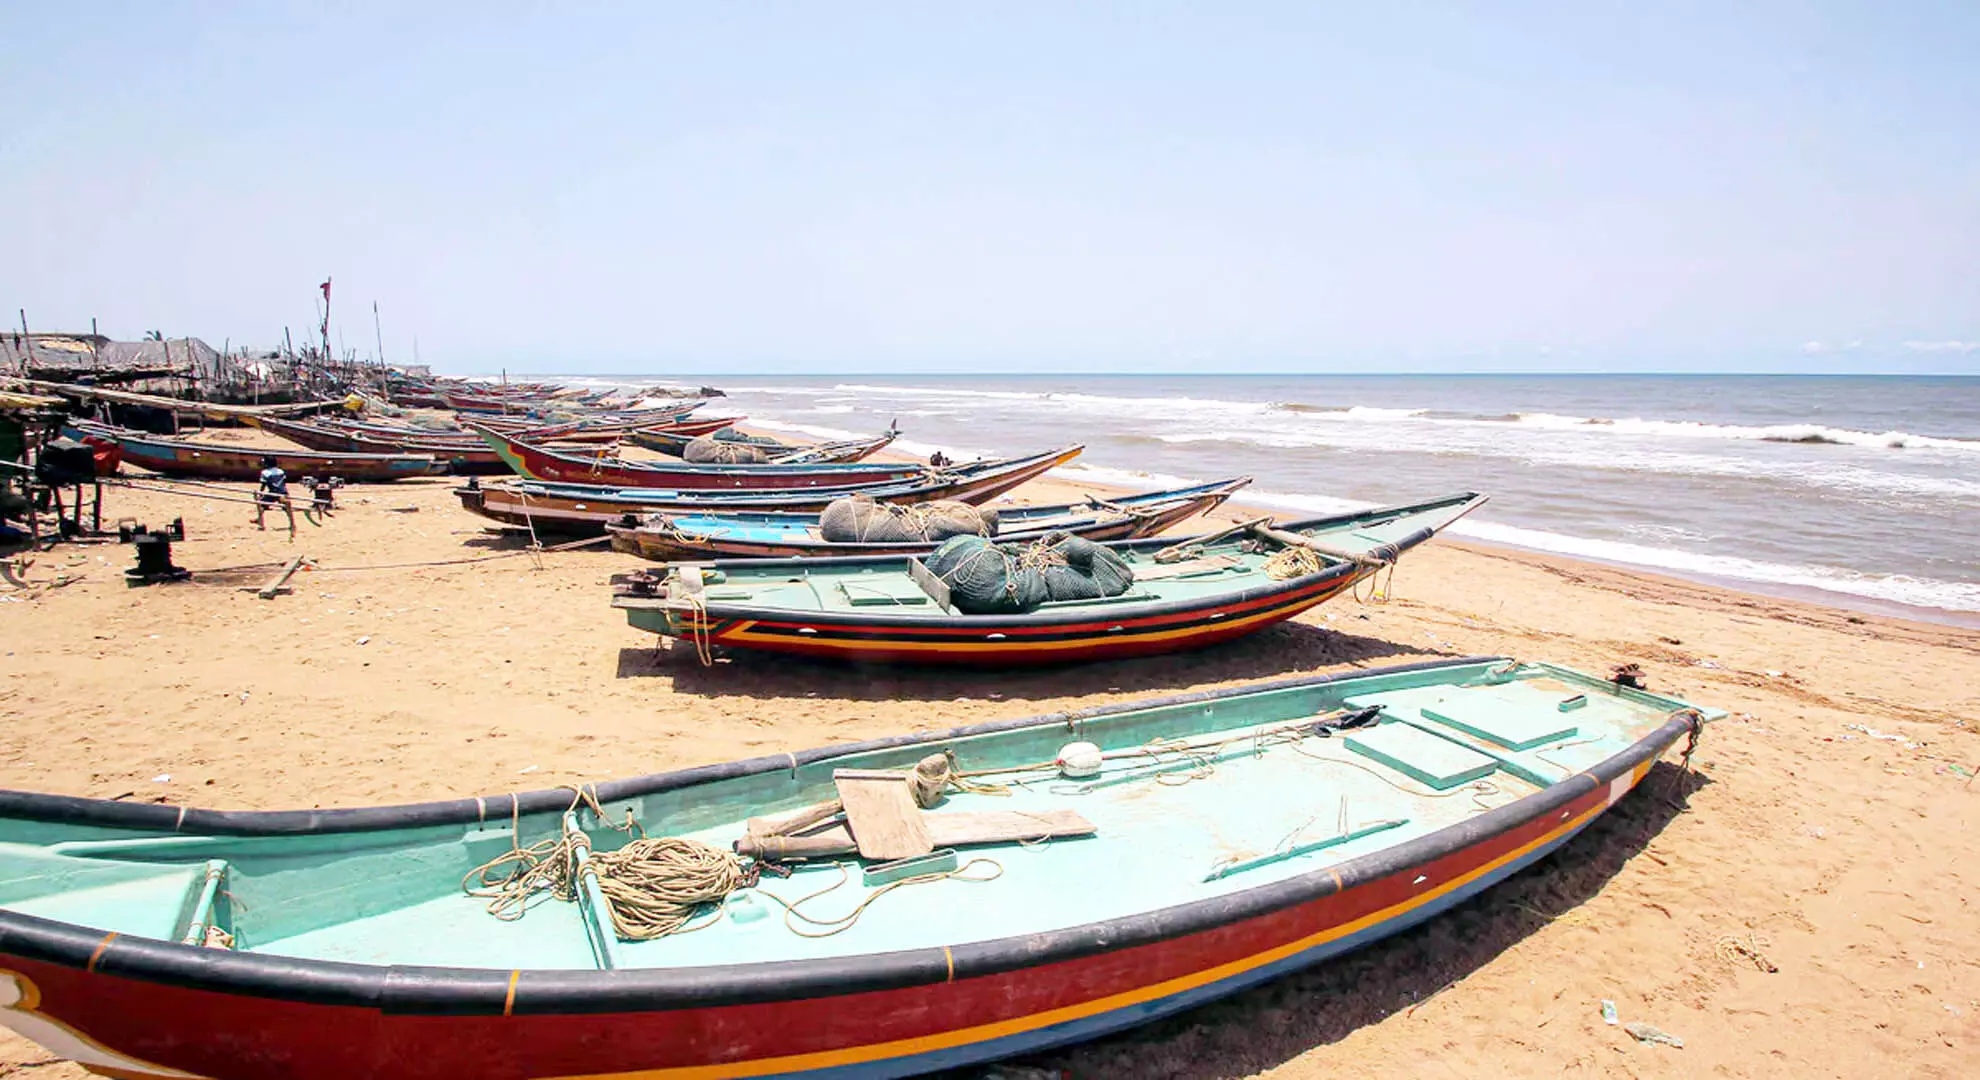 तमिलनाडु के मछुआरे ने सीएम का चेक लौटाया, मुआवजे को अपर्याप्त बताया